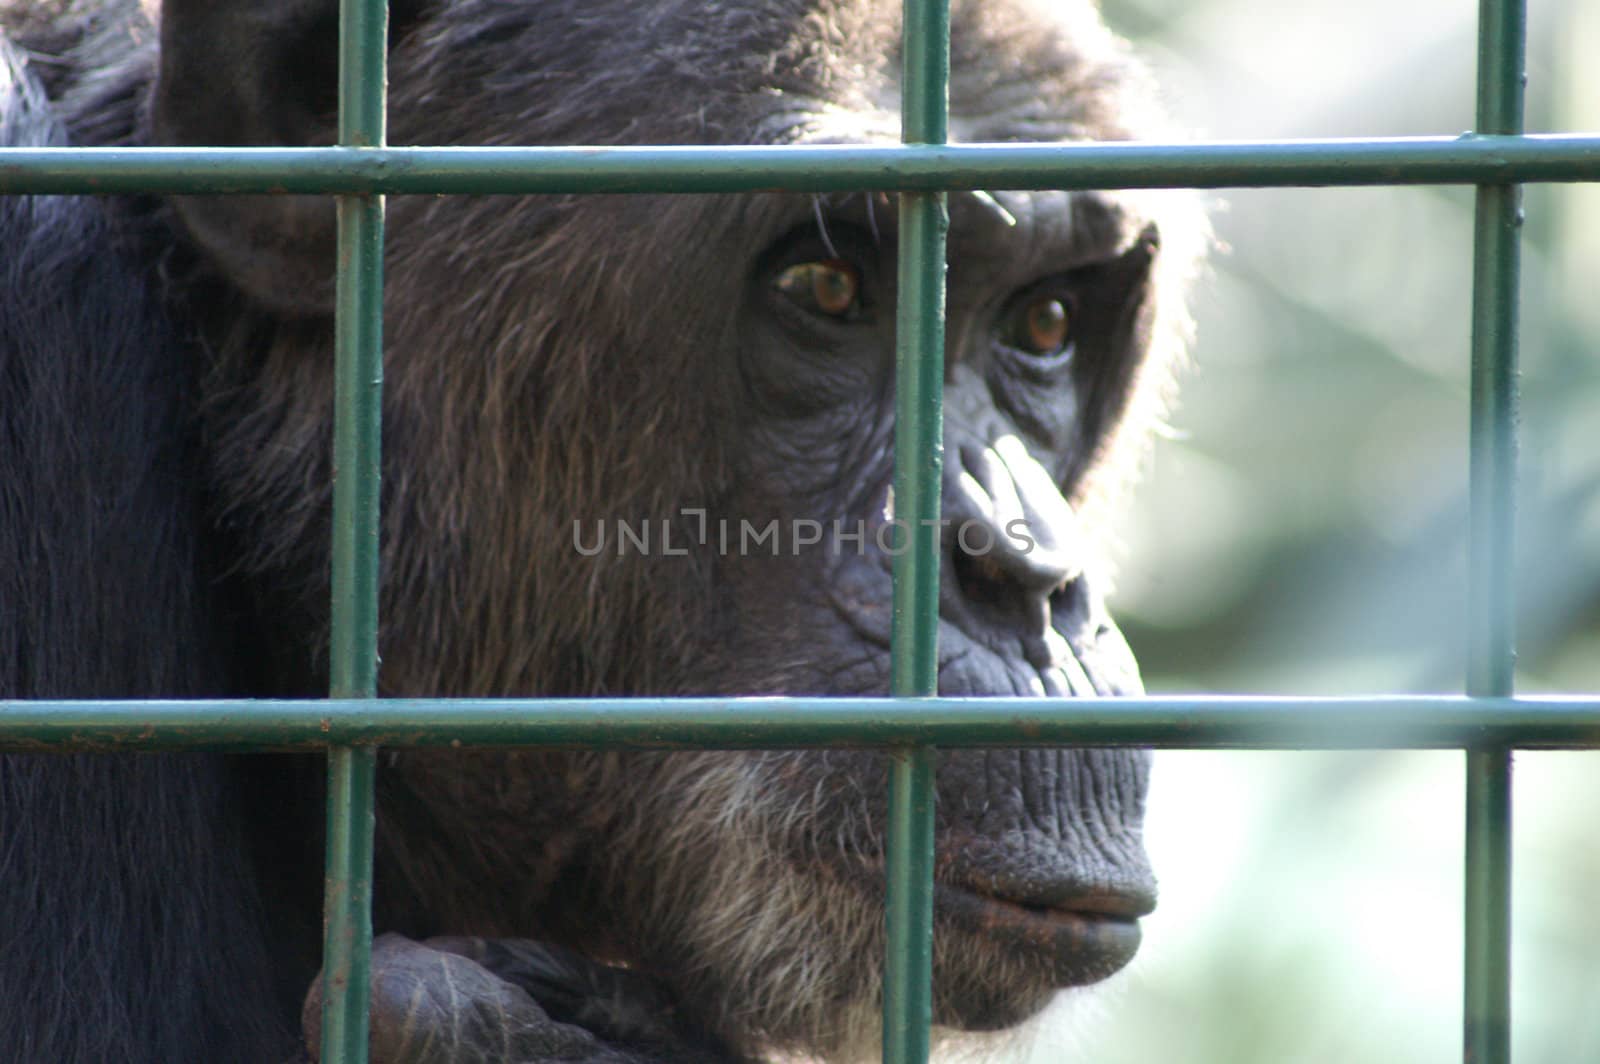 Monkey in captivity by photochecker